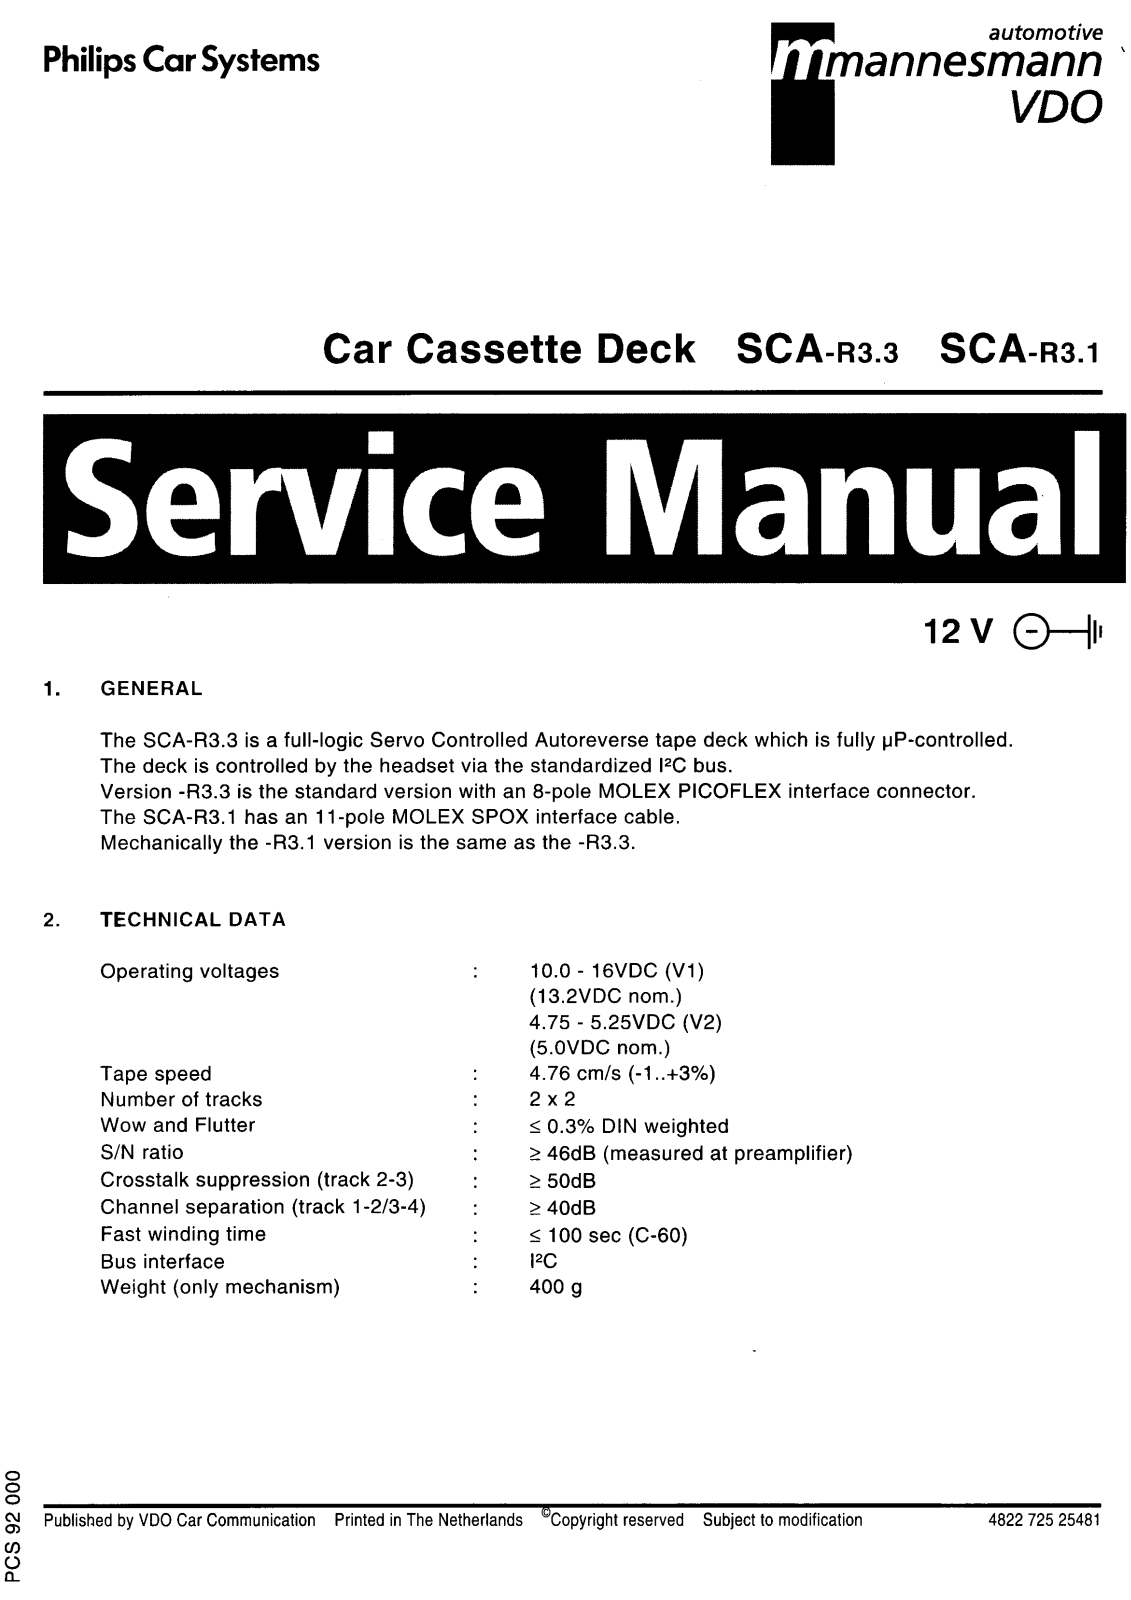 Philips SCAR-3.3, SCAR-3.1 Service Manual